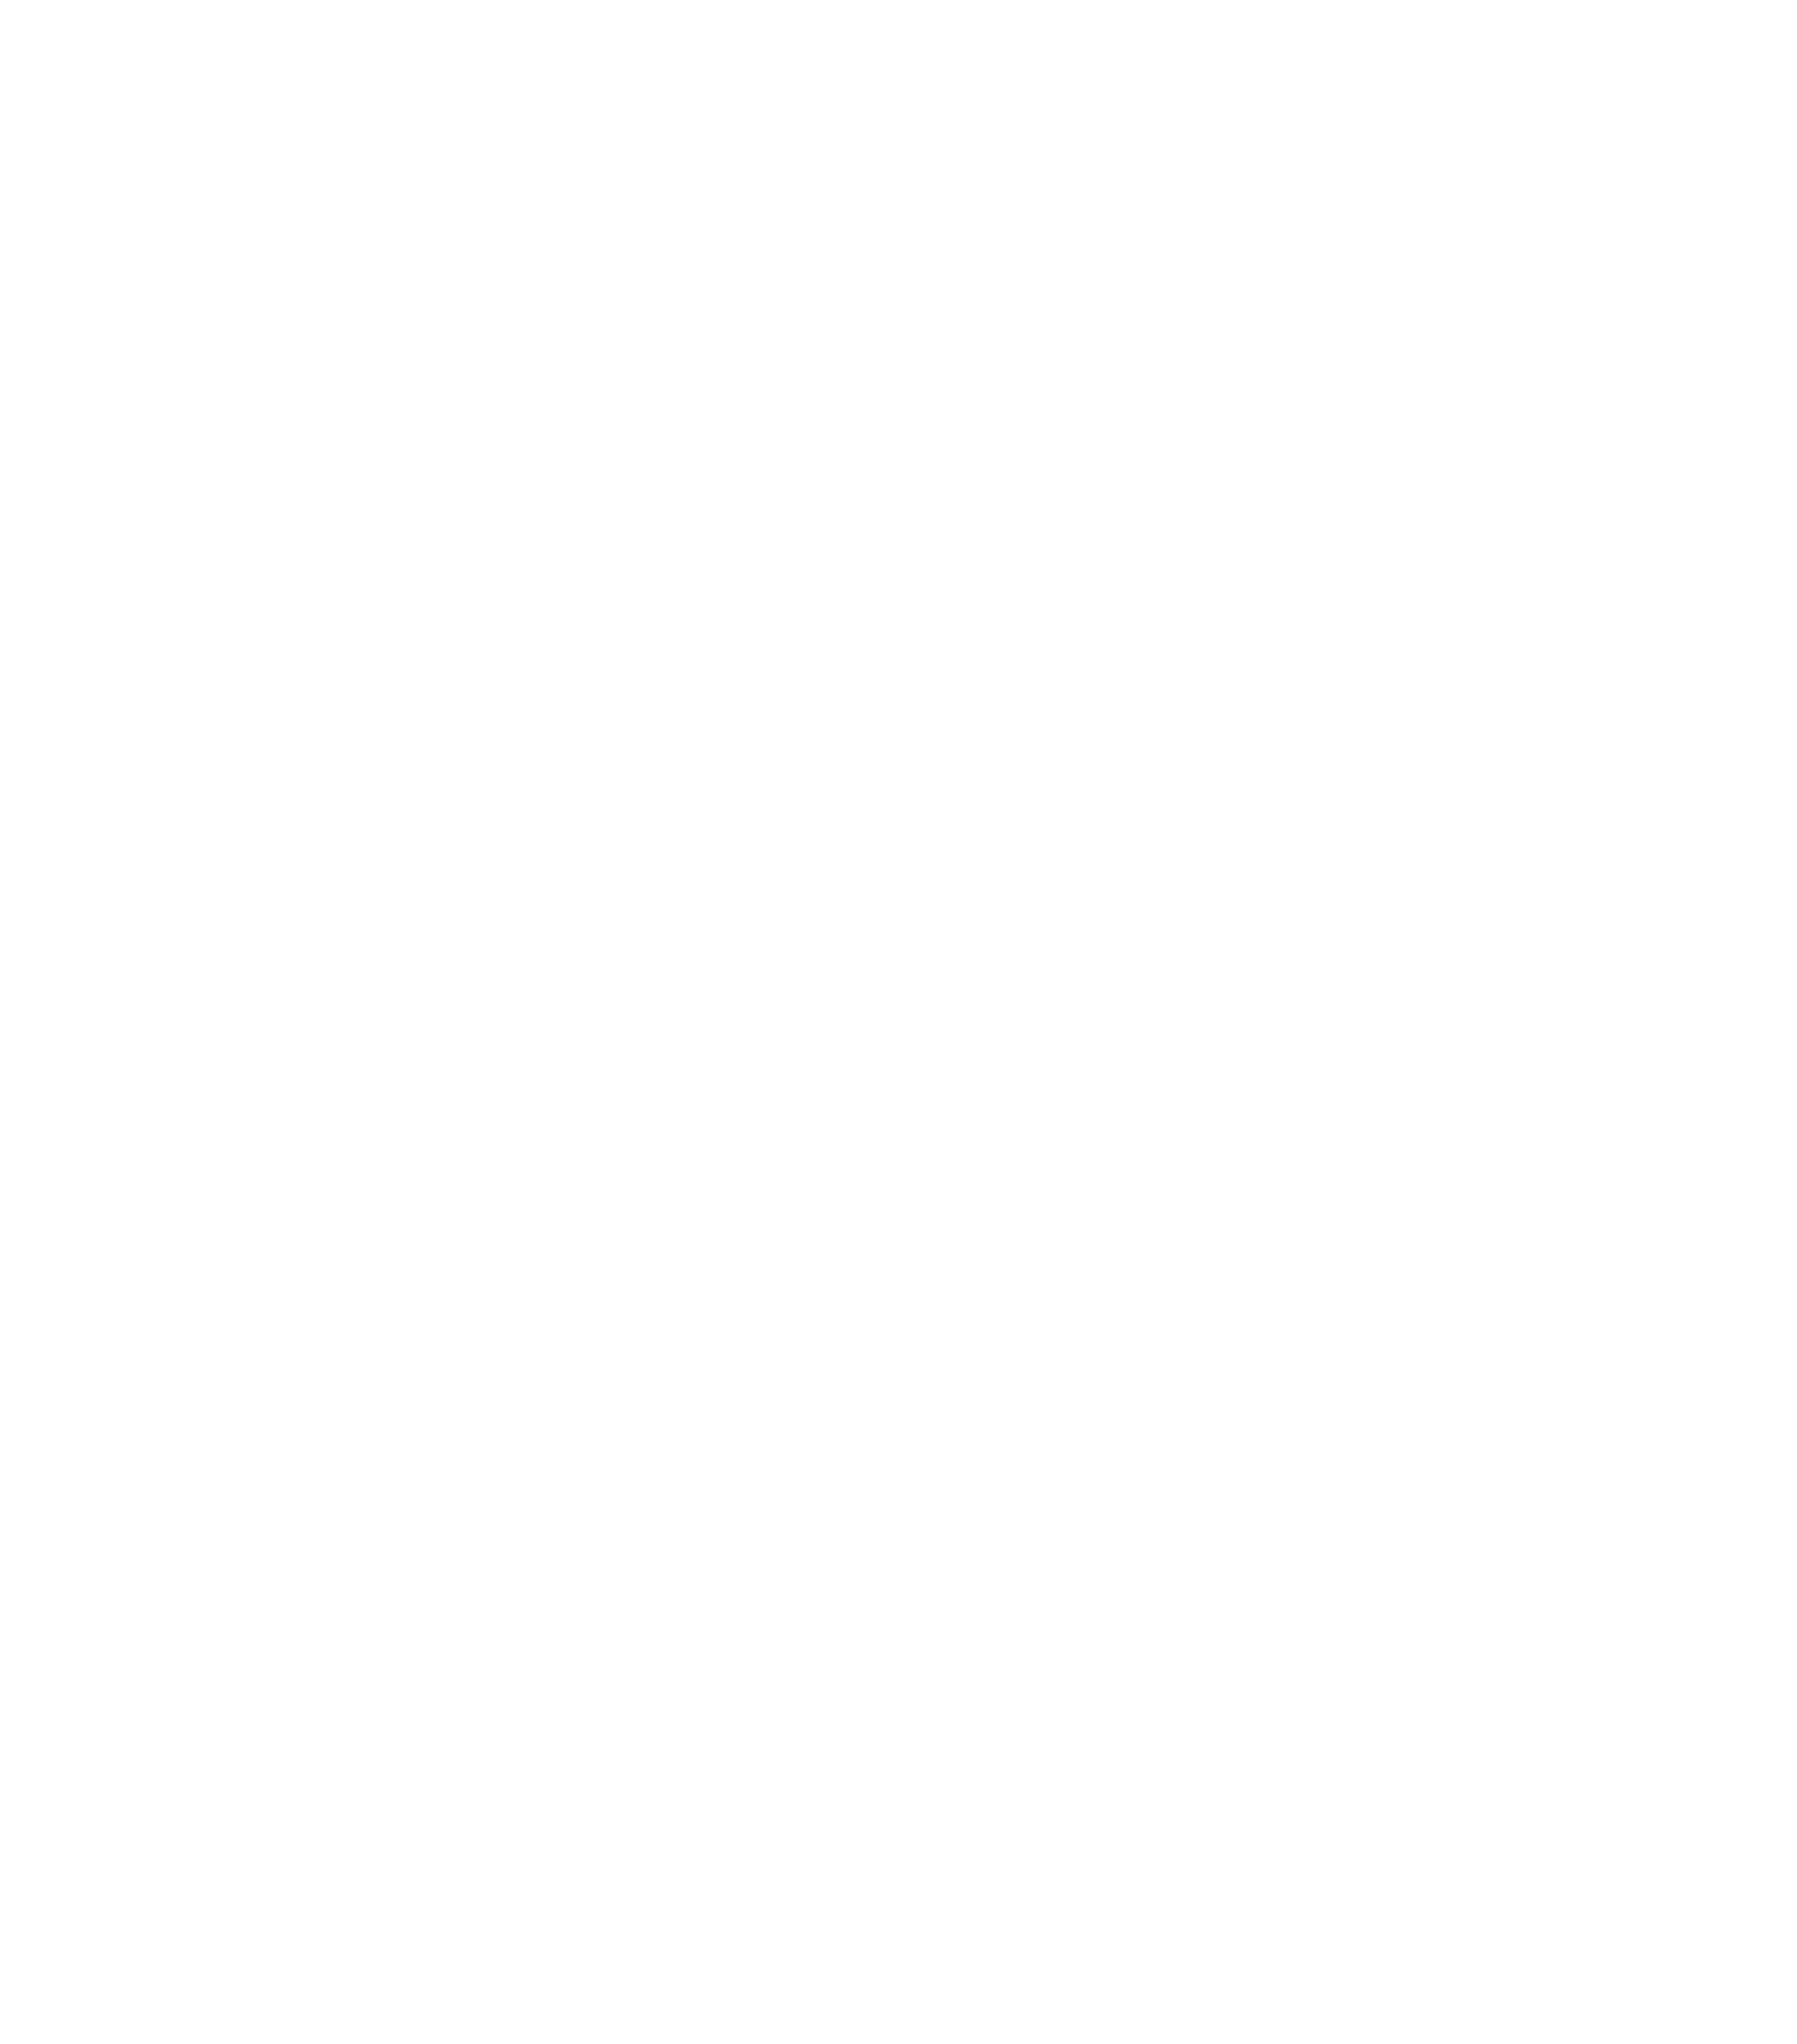 massages du monde logo